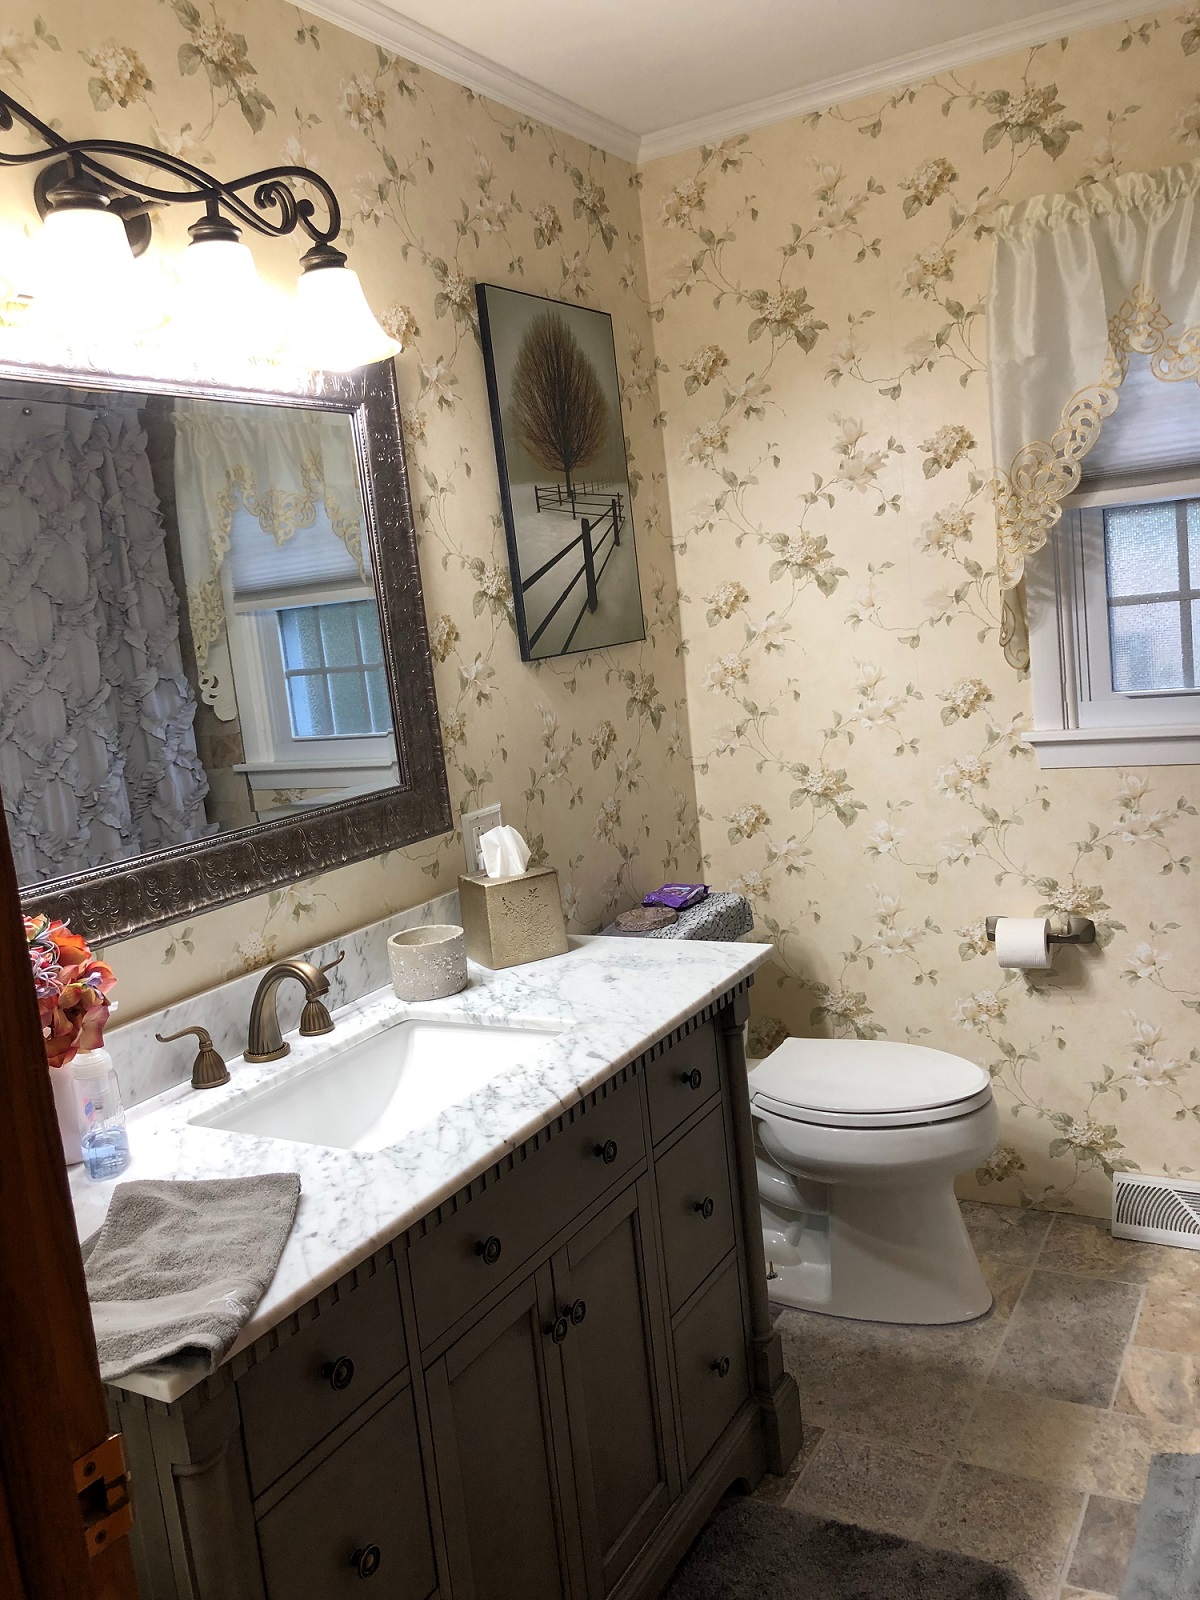 Is wallpaper waterproof for bathrooms?